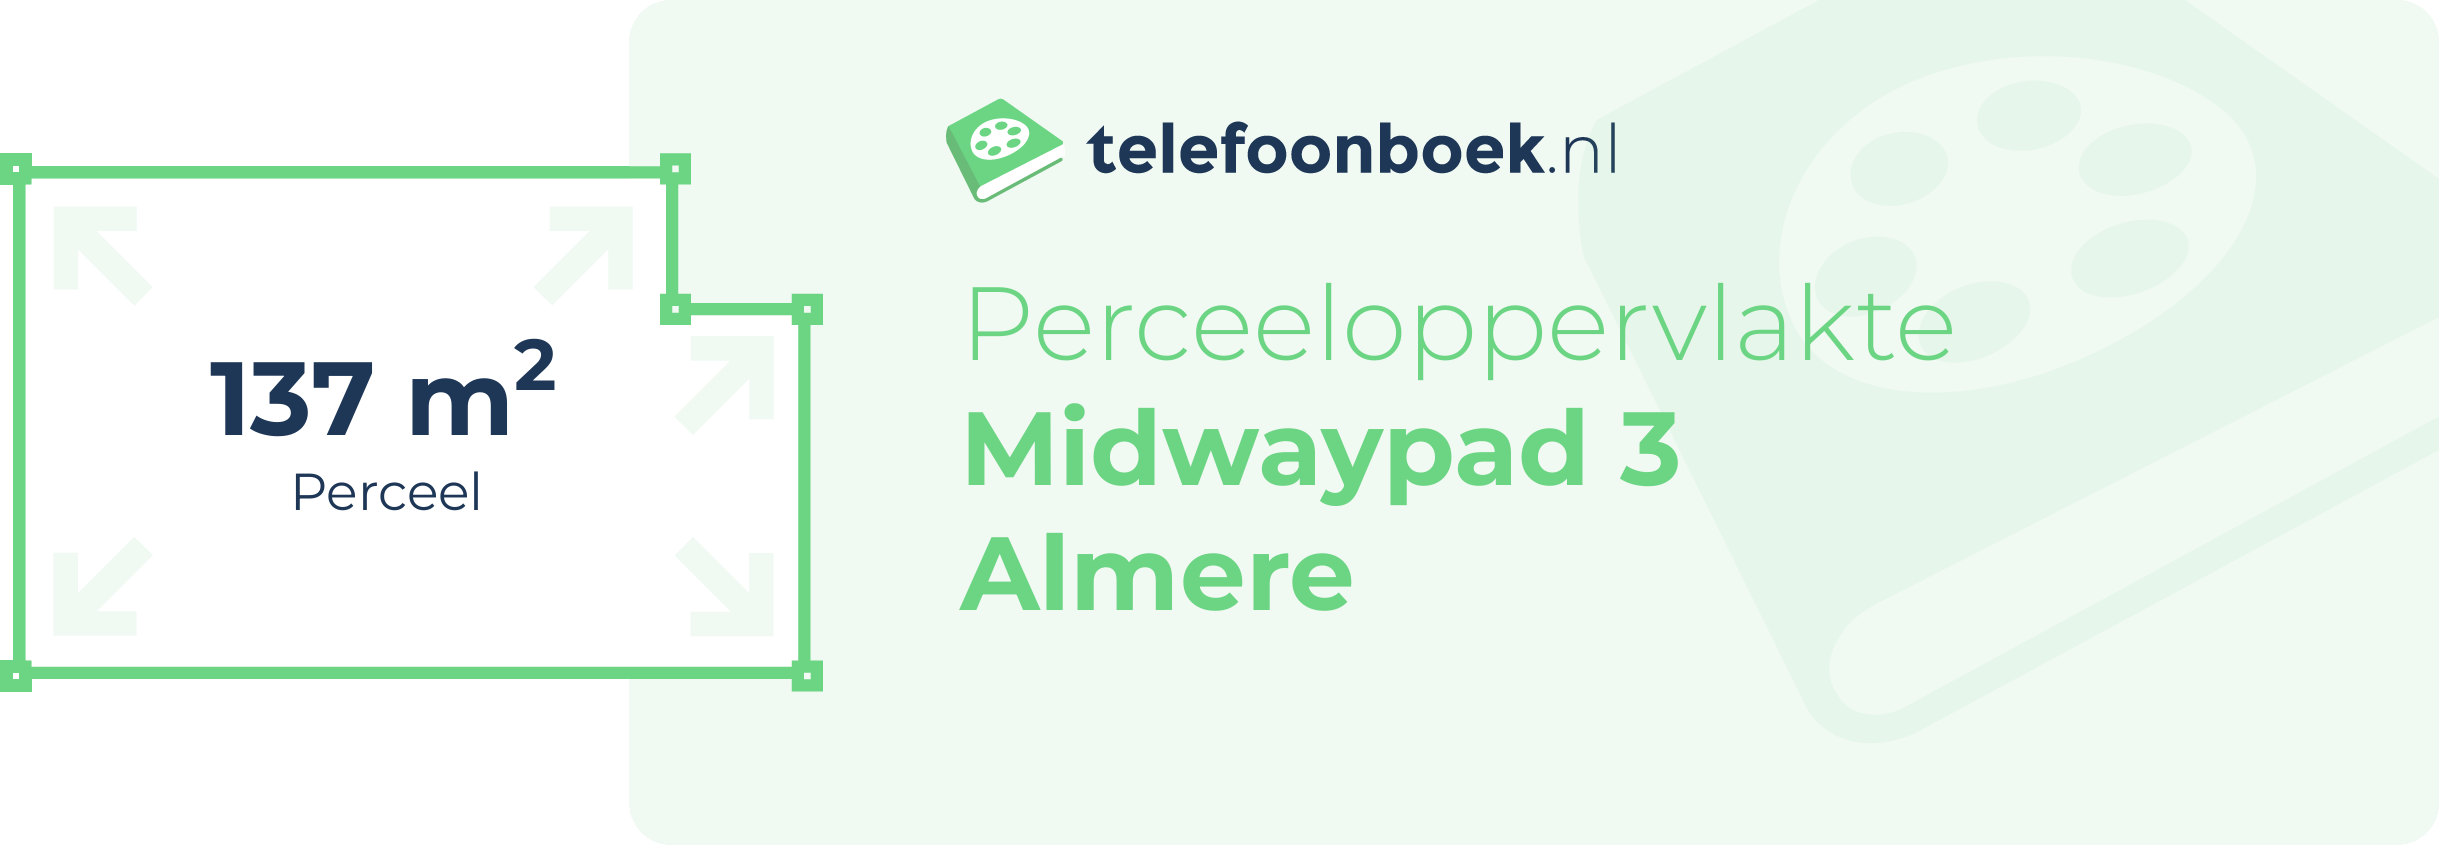 Perceeloppervlakte Midwaypad 3 Almere